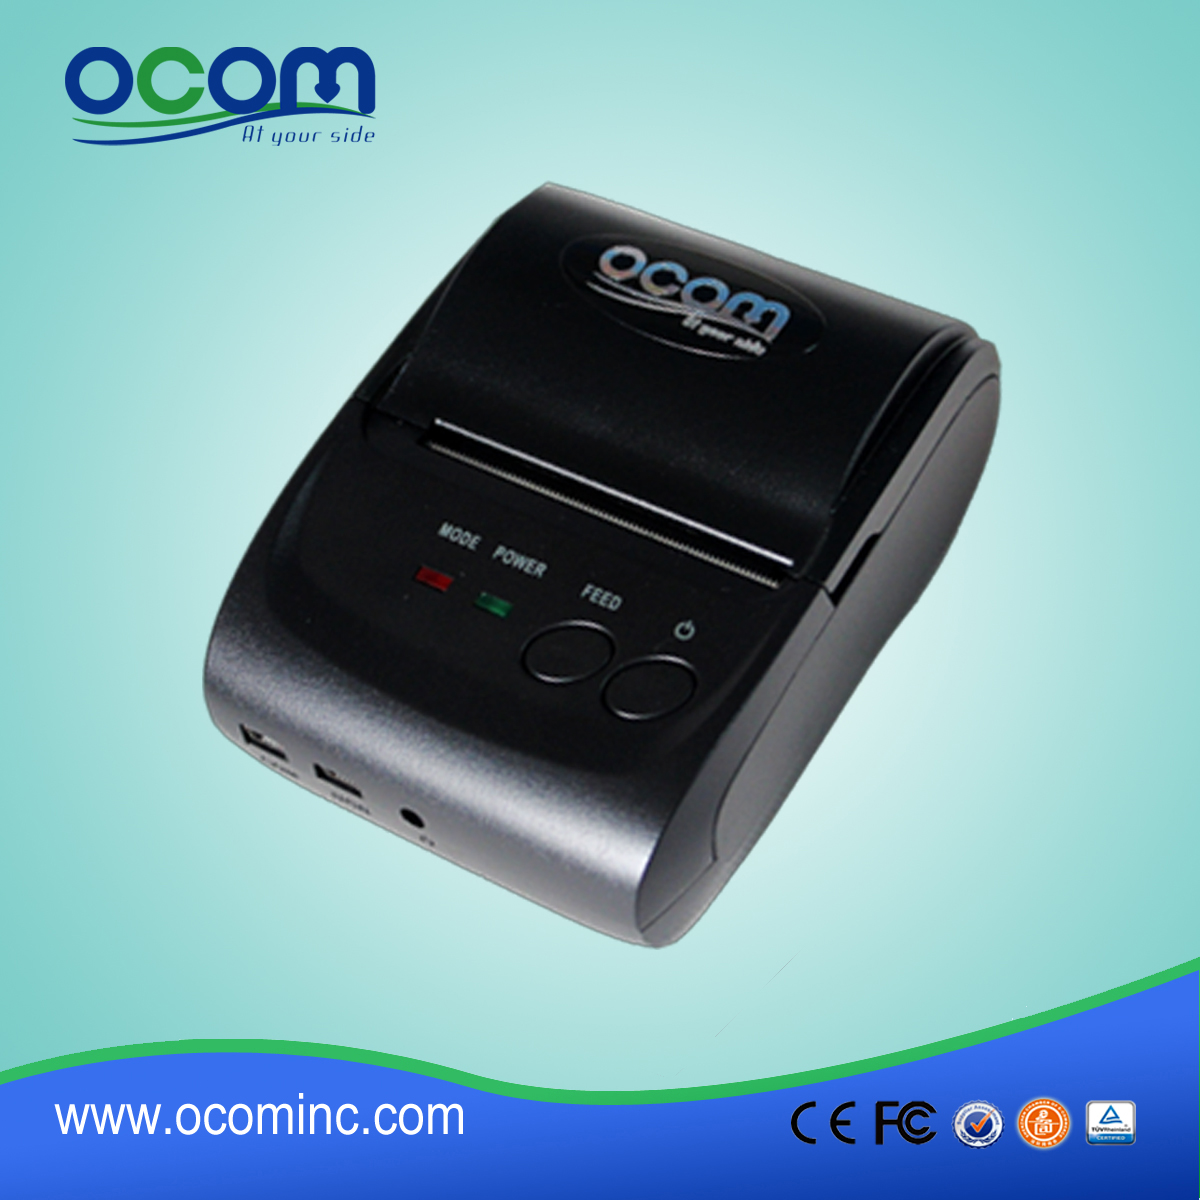 OCPP-M05: alta qualità di stampa mobile del bluetooth 58 millimetri, stampante termica mini usb